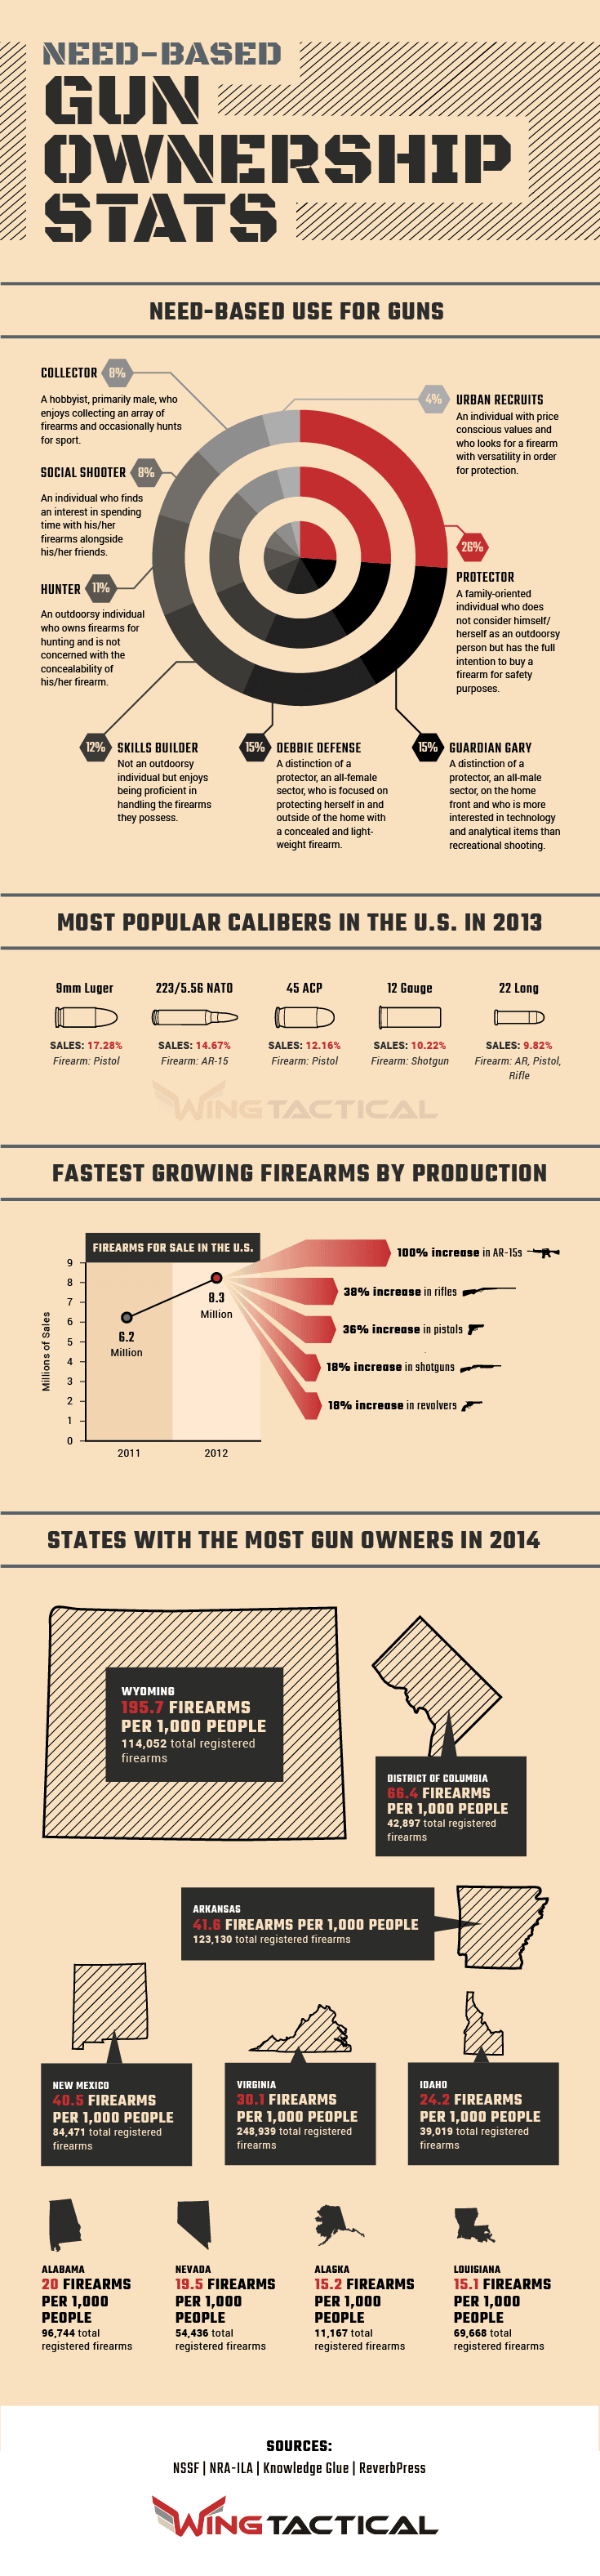 An infographic highlighting need-based gun ownership statistics